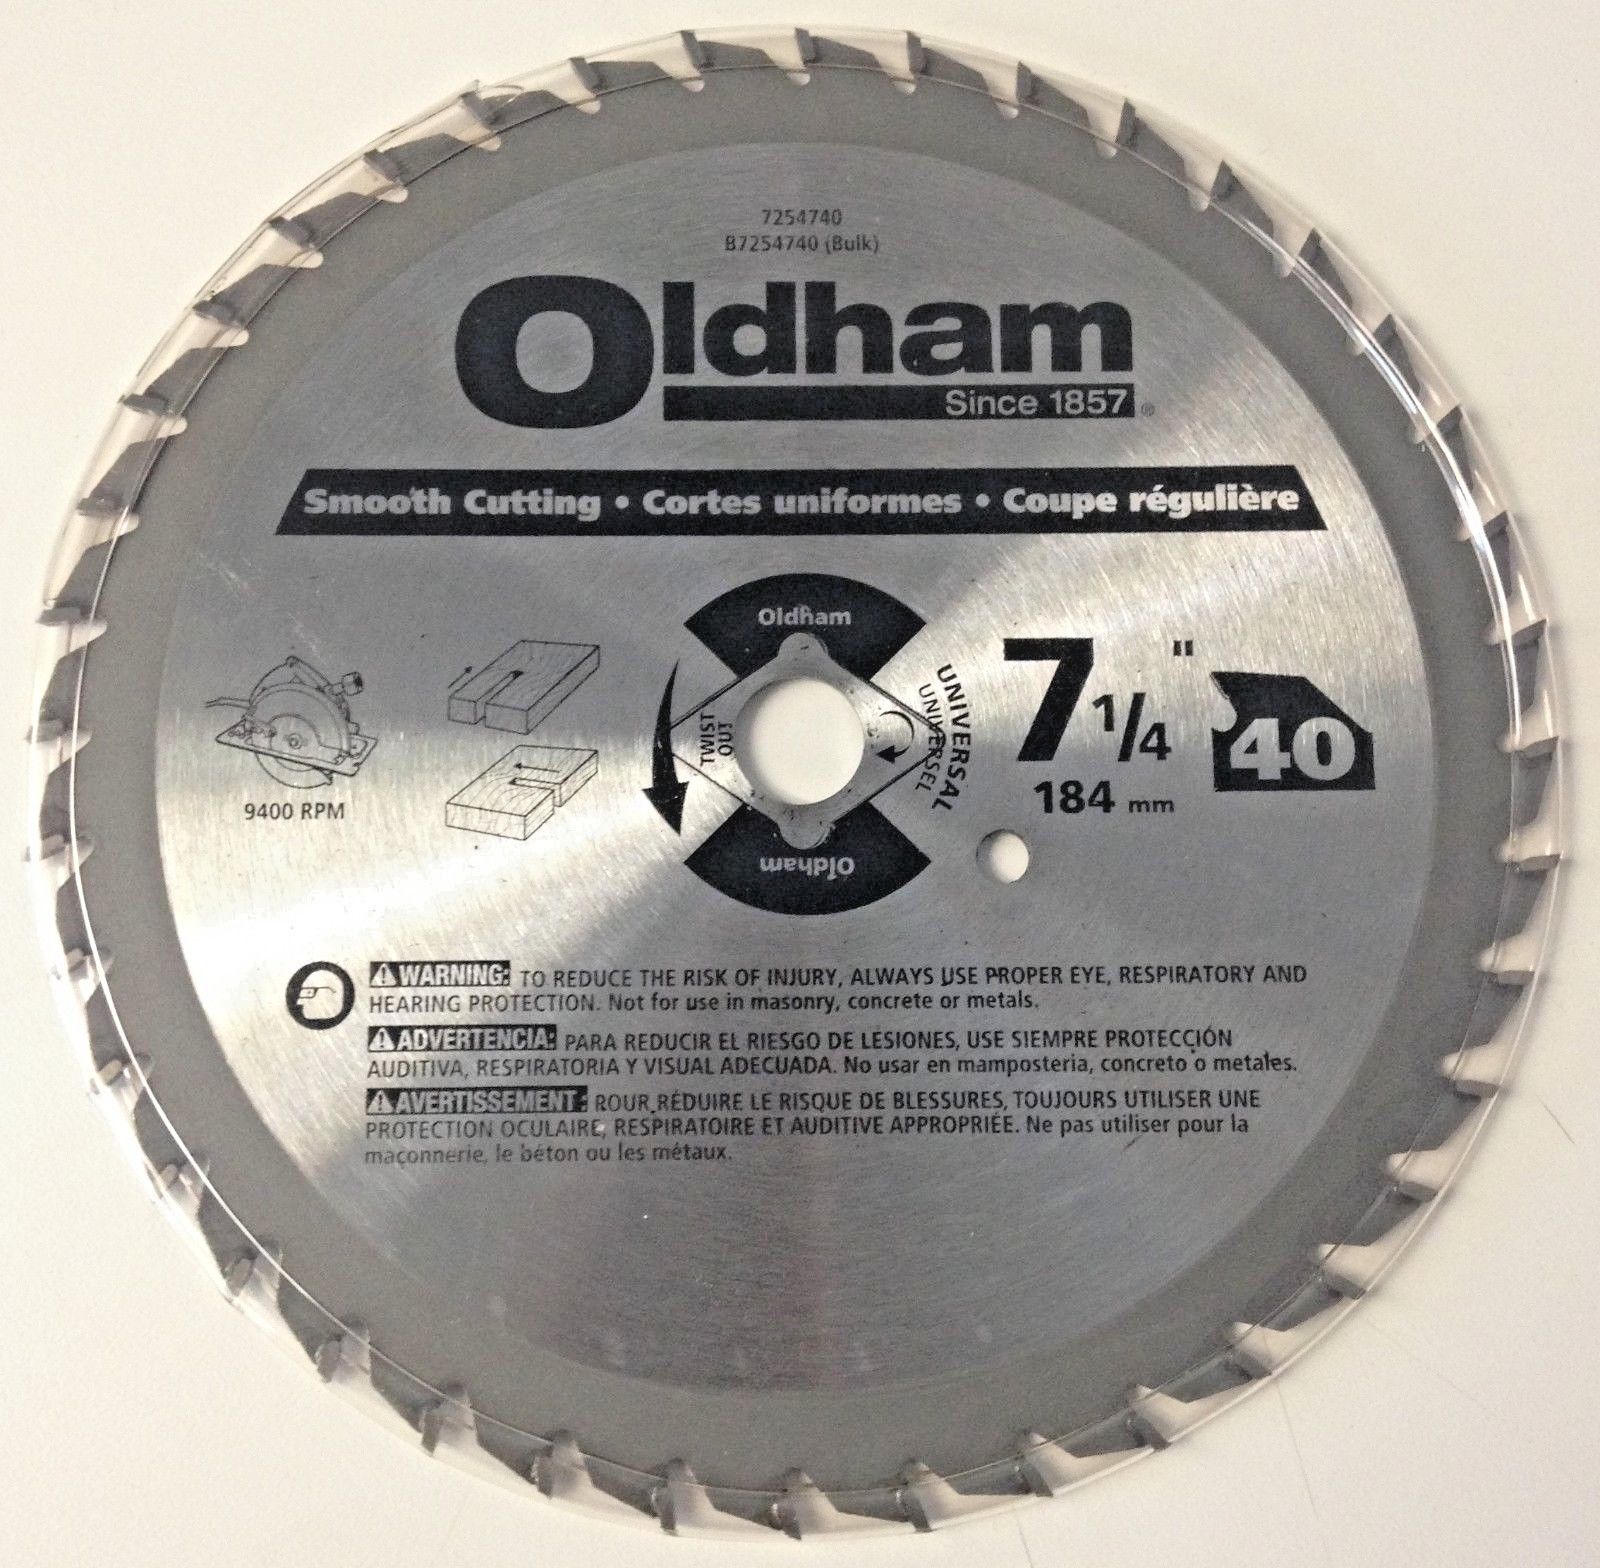 Oldham 7254740 7-1/4" x 40 Tooth Smooth Cutting Circular Saw Blade